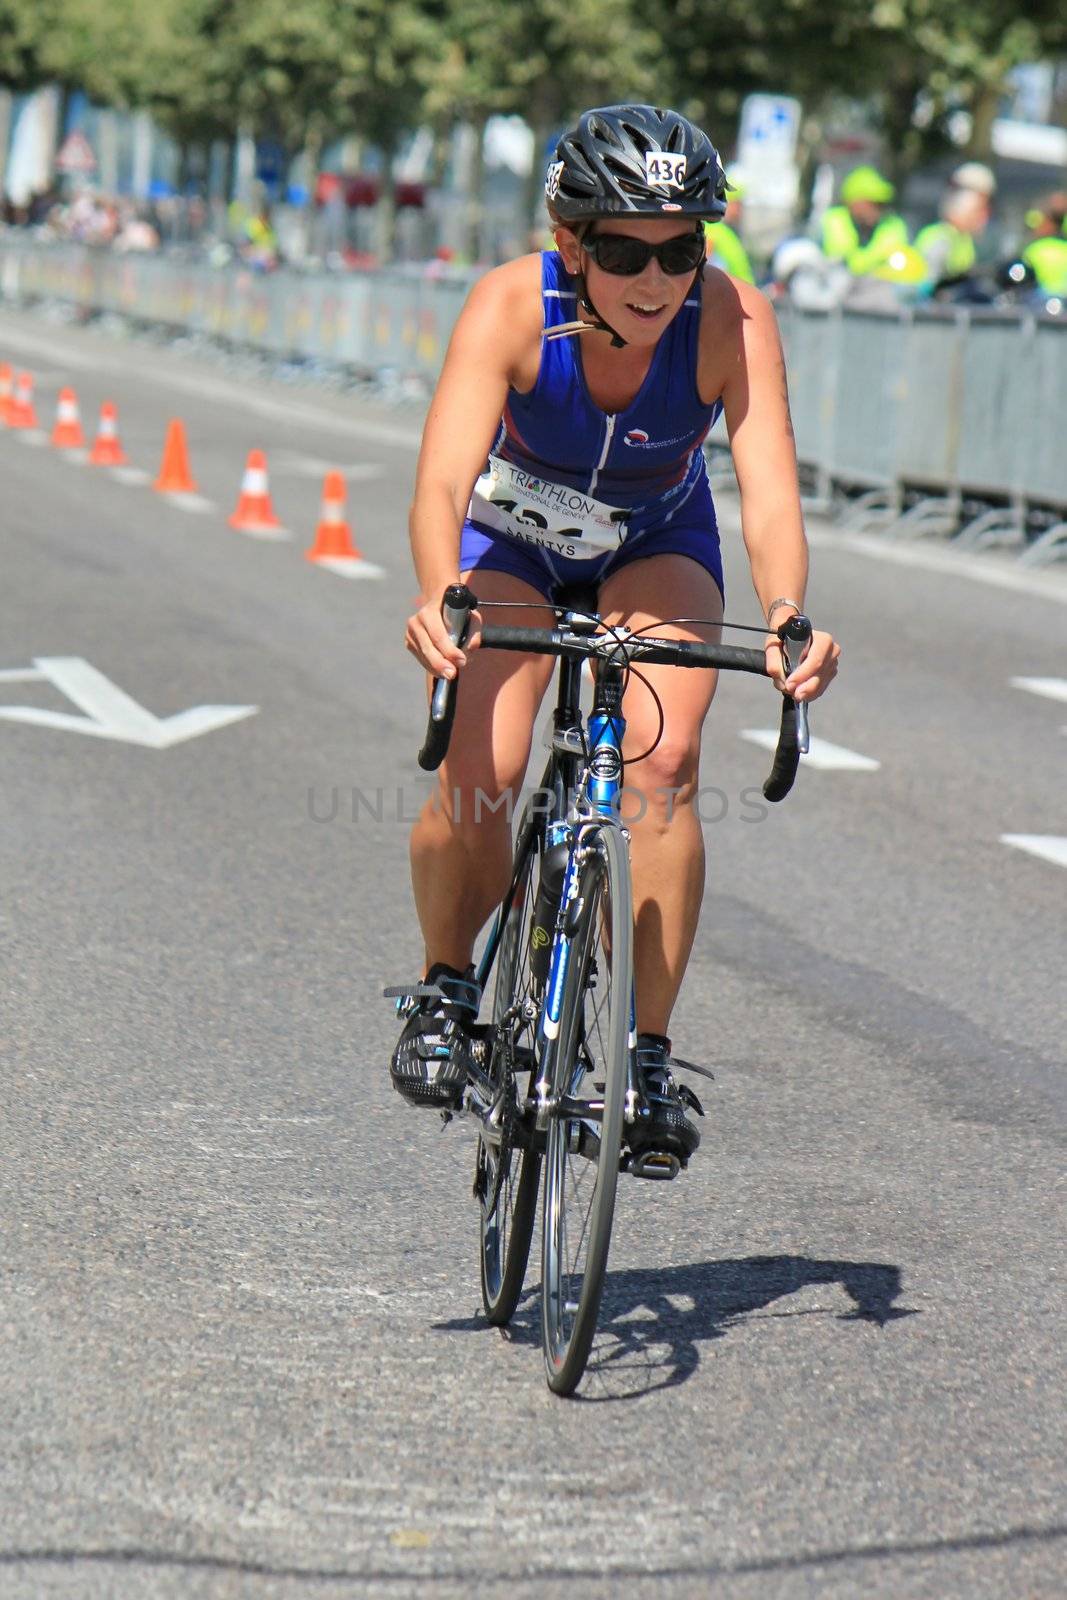 Woman cyclist at the International Triathlon 2011, Geneva, Switzerland